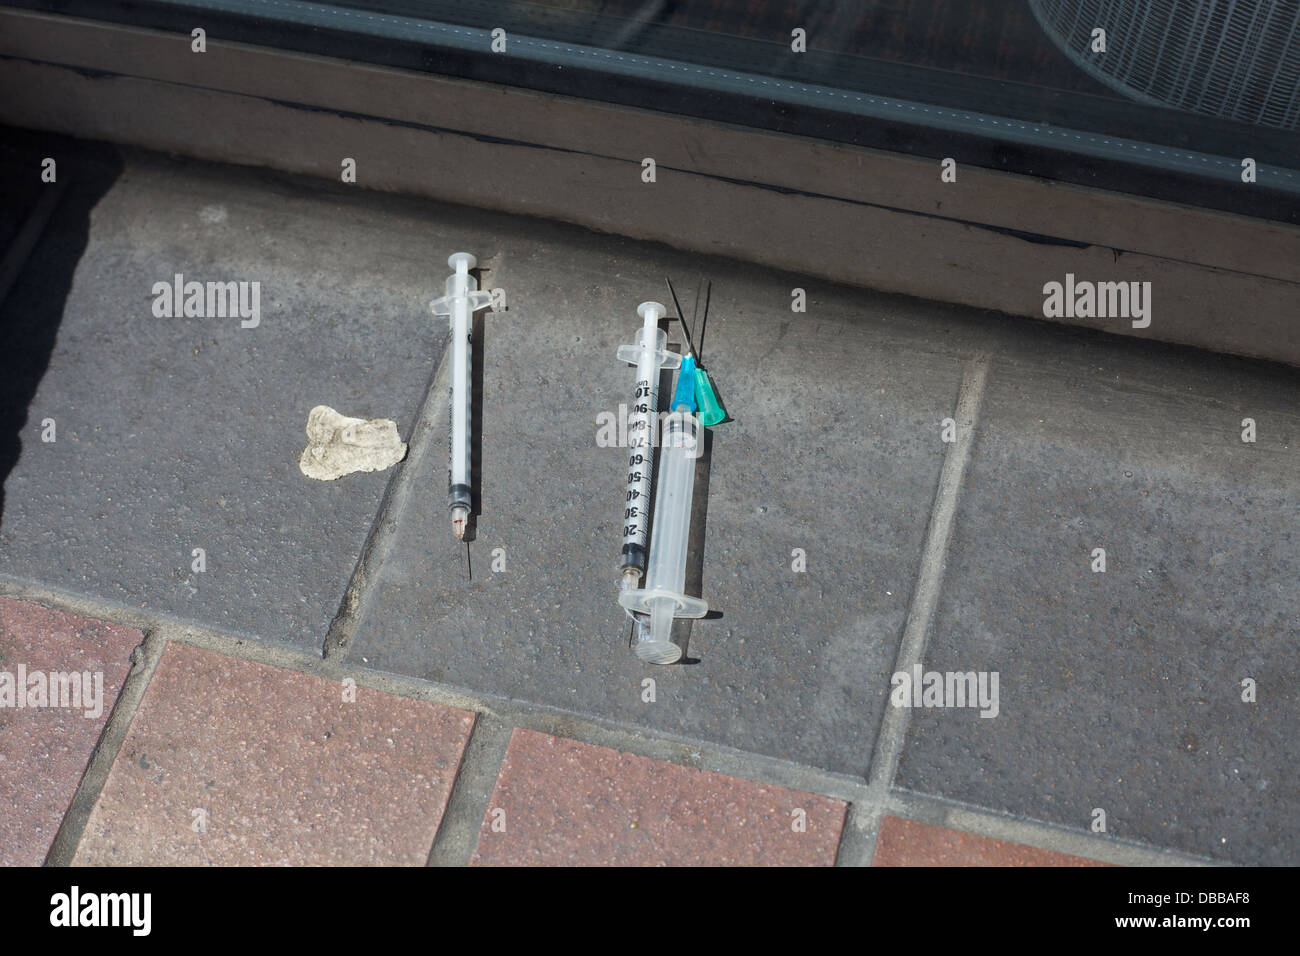 Drug addicts needles left in a city street. Stock Photo